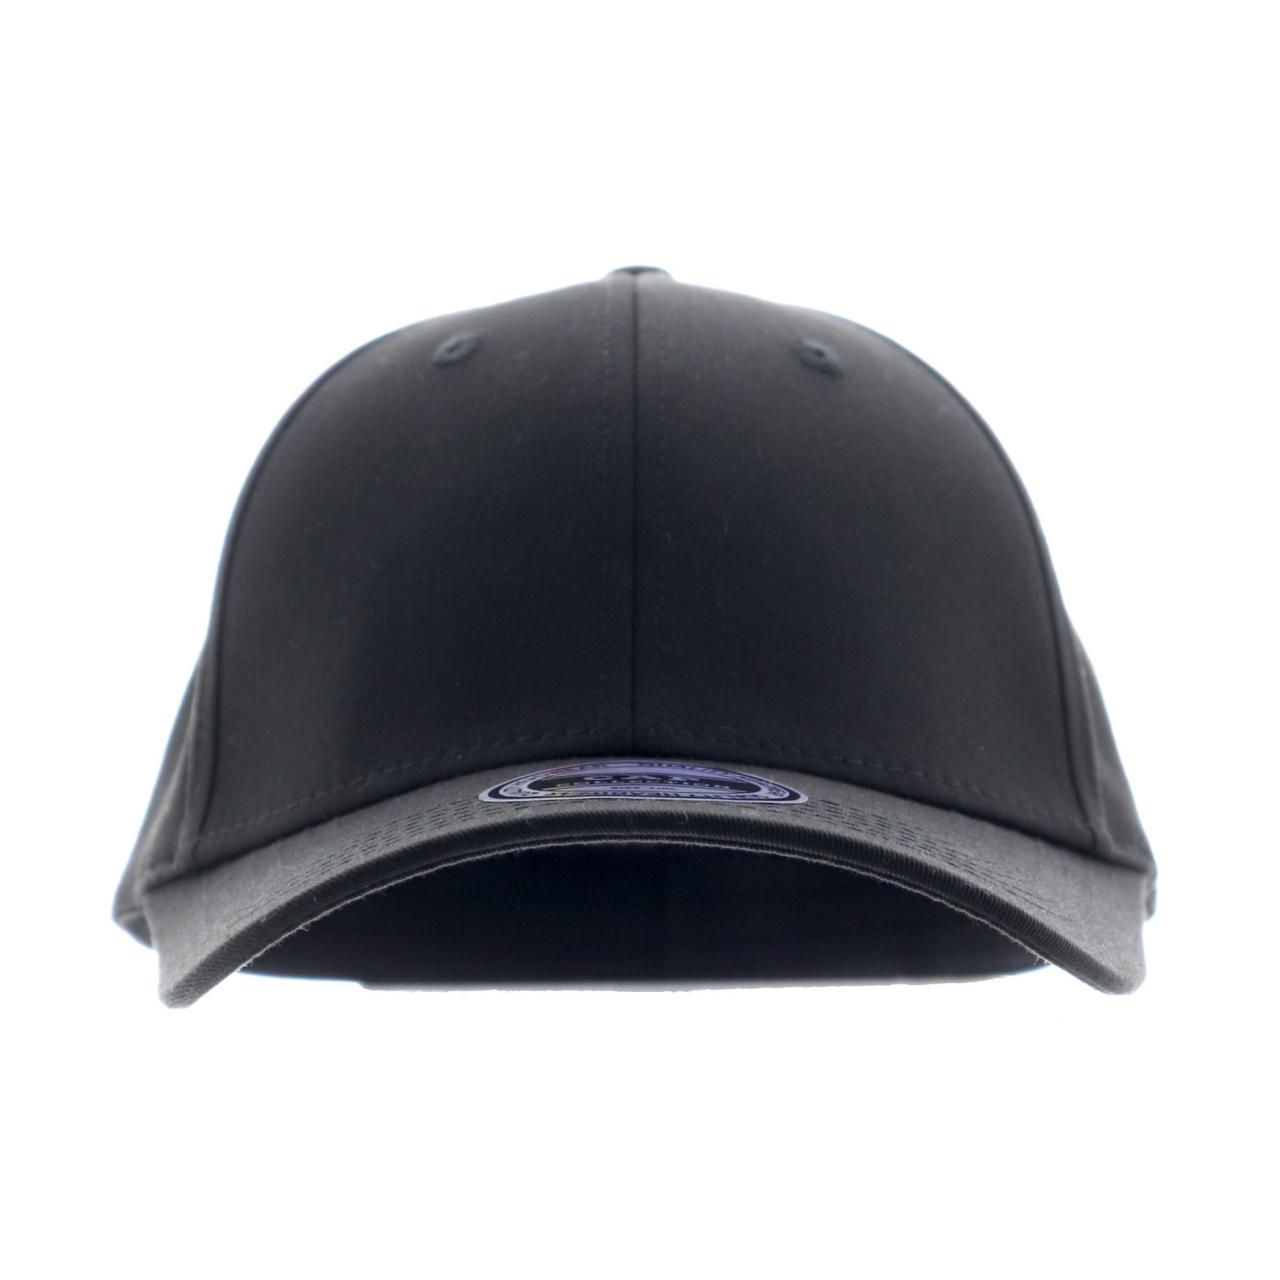 Baseball Cap w/Elastic Band Black Size L/XL